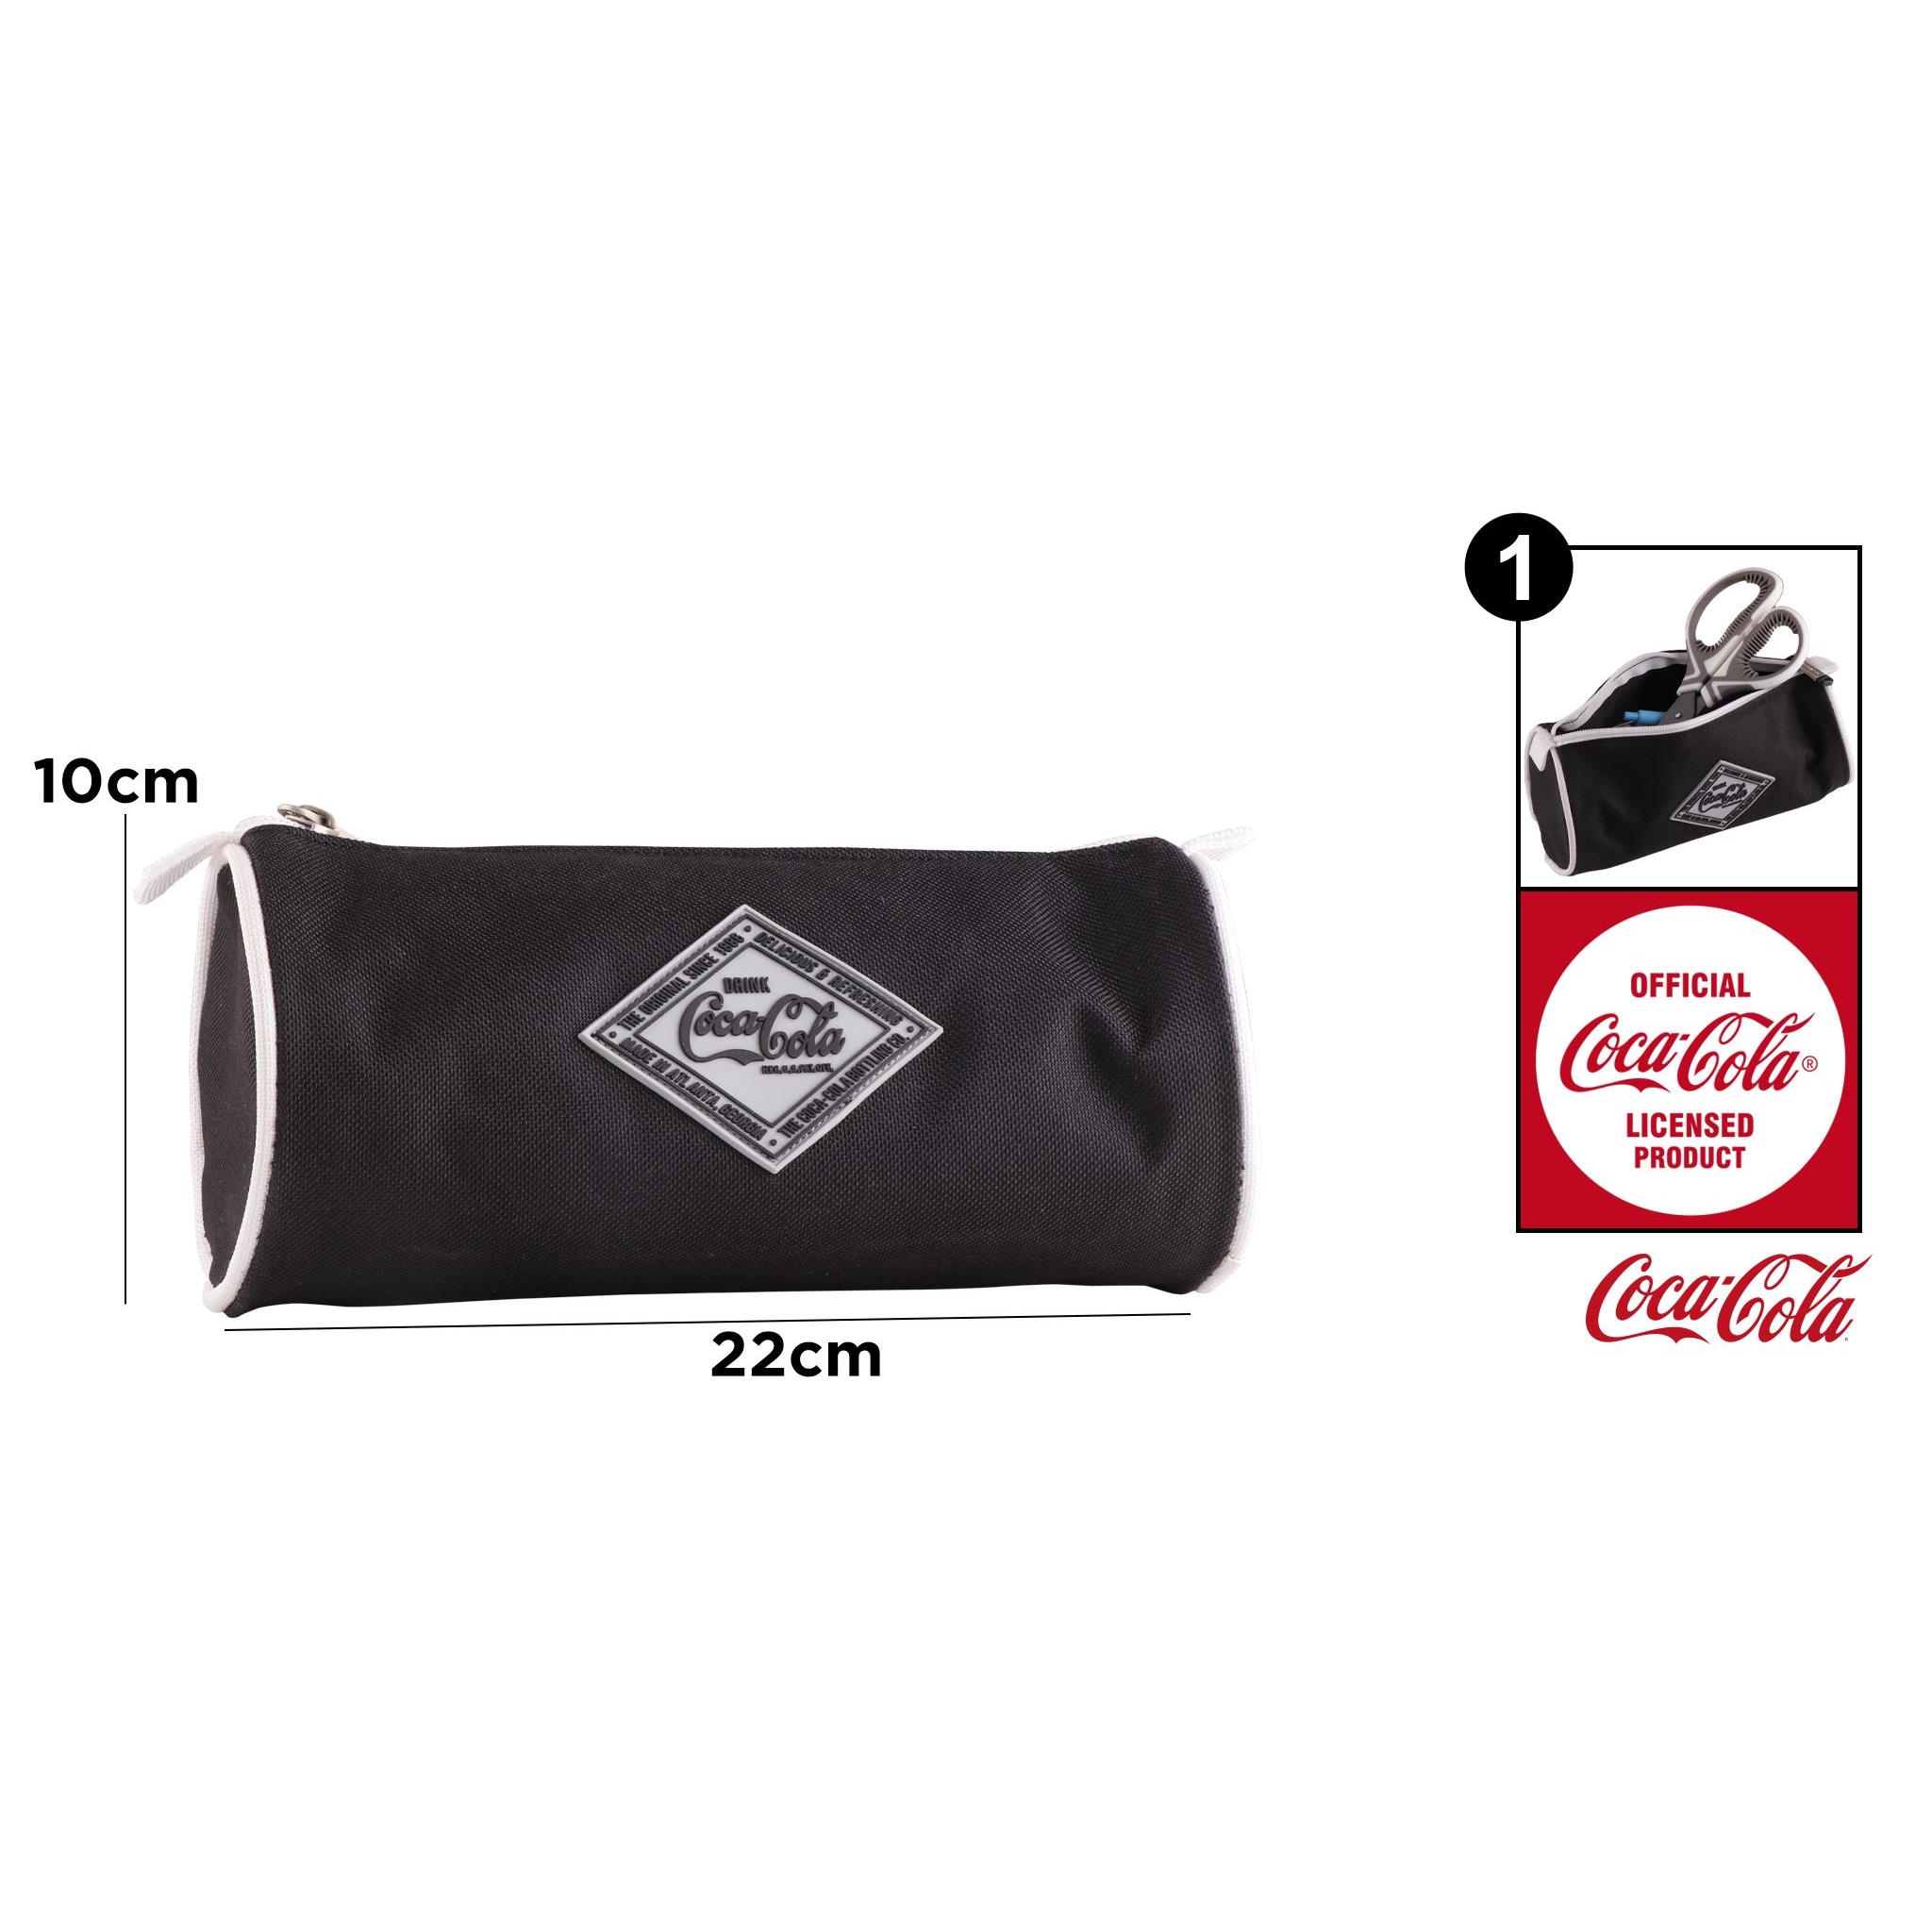 CC005 Coca-Cola Co-Branded Calamum Pouch Black Cloth Bag